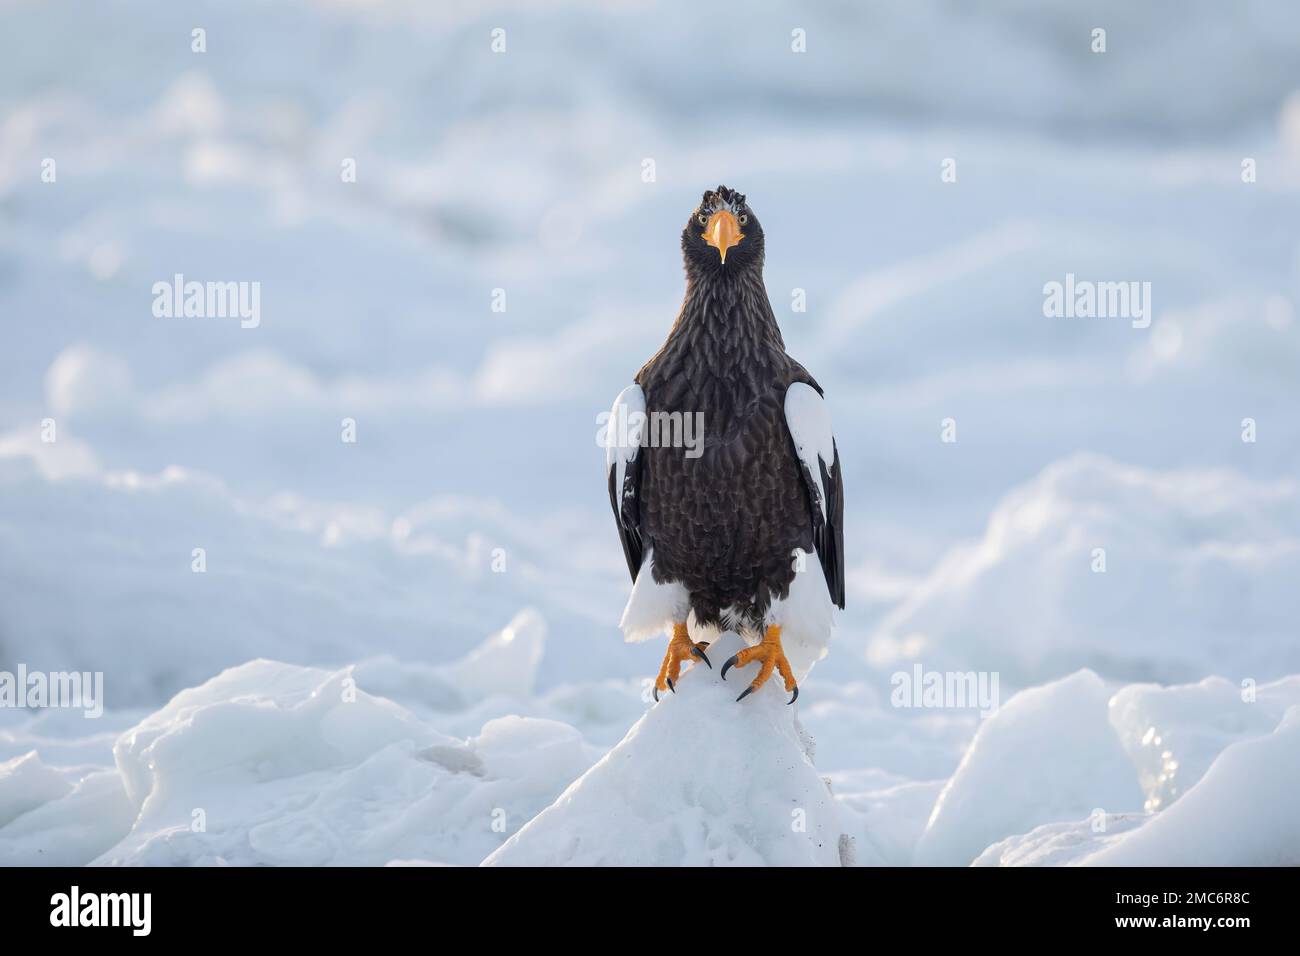 Steller's sea eagle (Haliaeetus pelagicus) perched on sea ice in the Nemuro Strait, Hokkaido, Japan Stock Photo